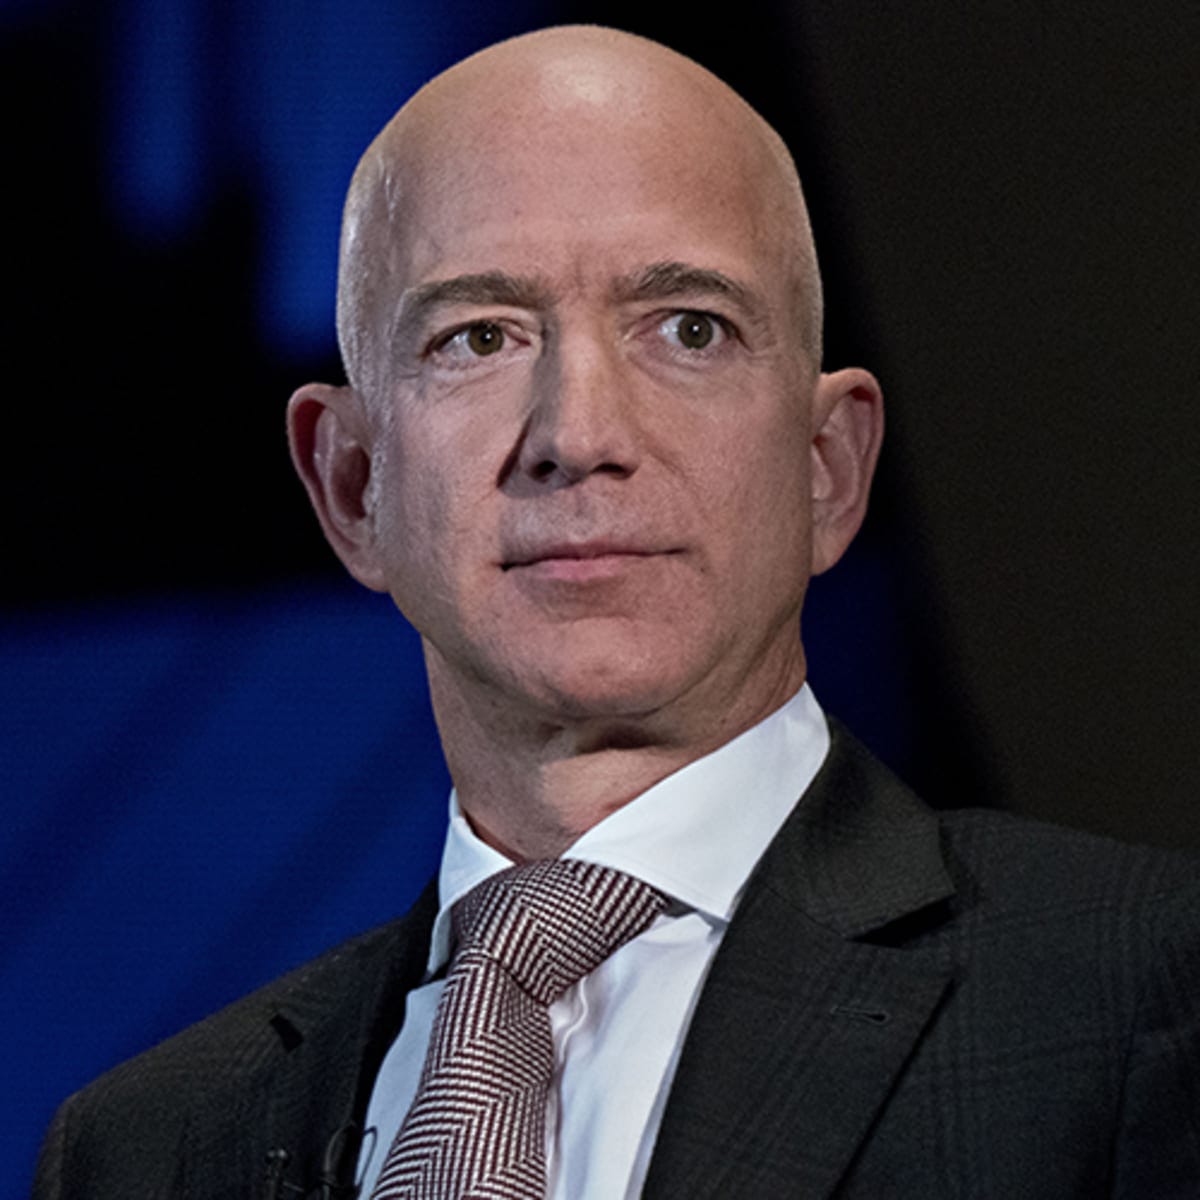 Jeff Bezos - Wife, Kids & Amazon - Biography